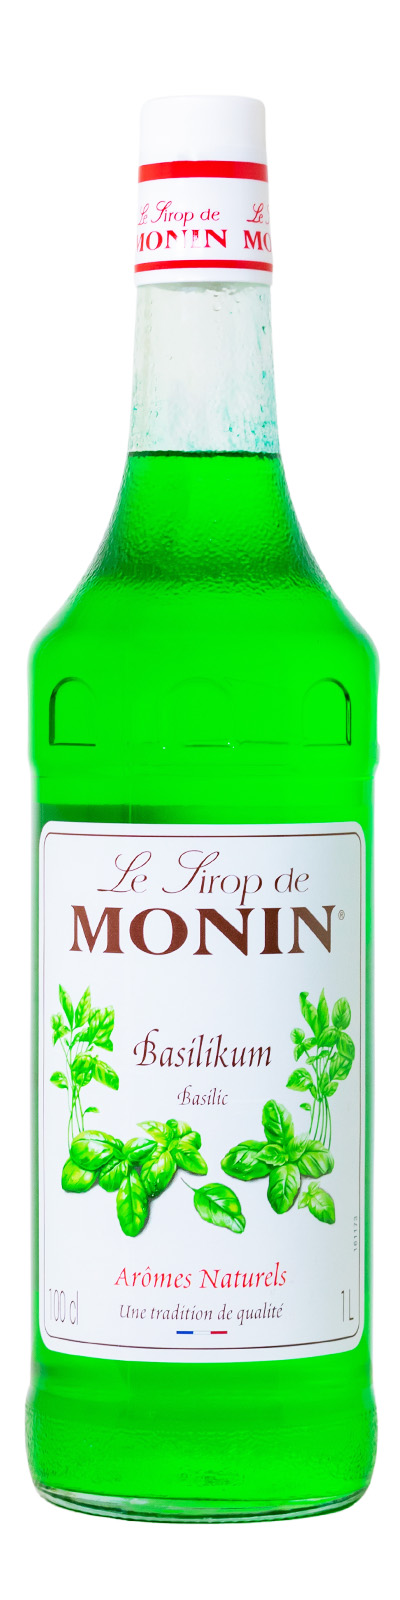 Monin Basilikum Basilic Sirup - 1 Liter